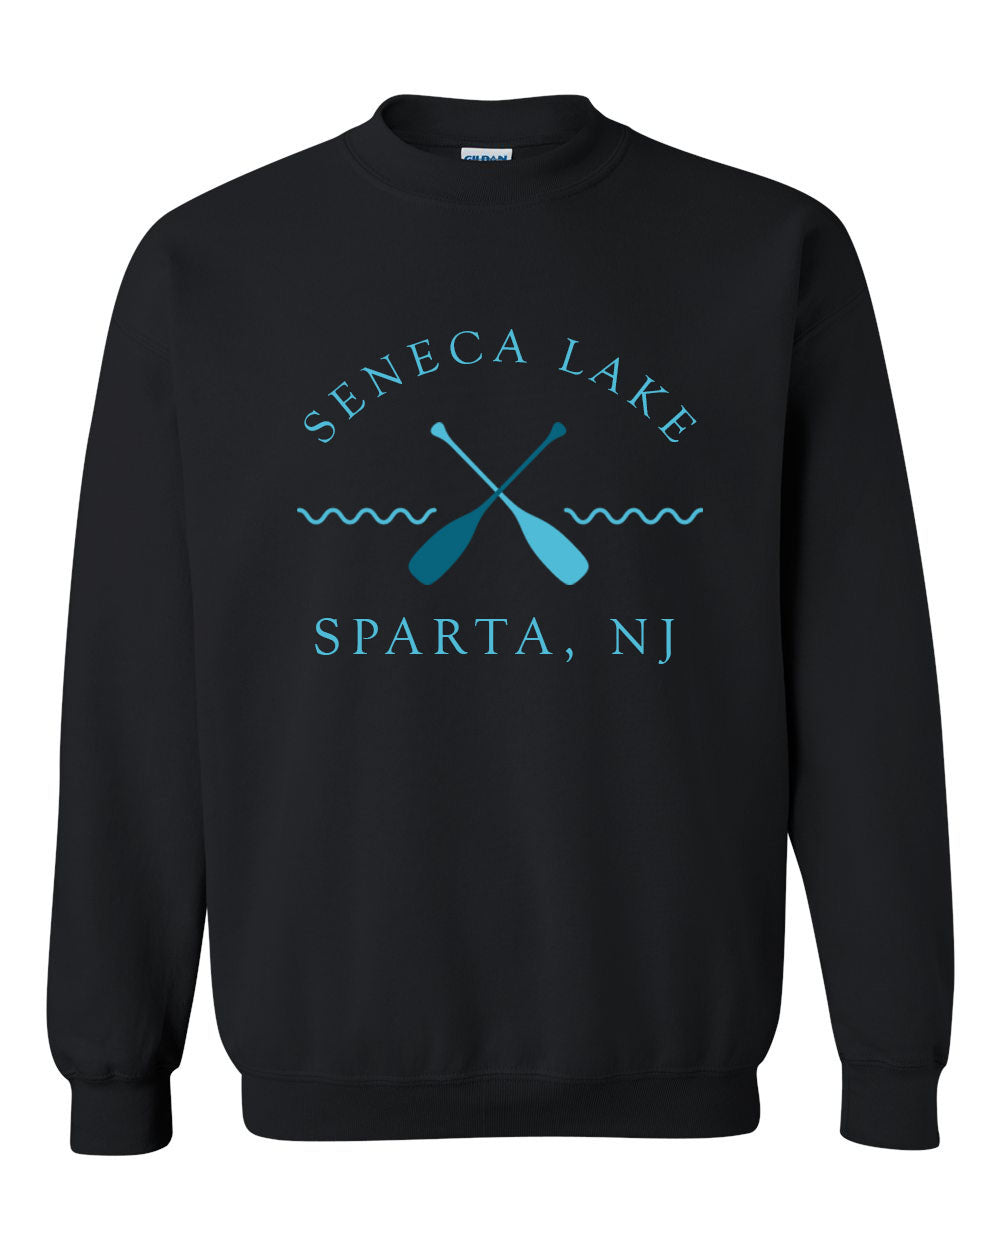 Seneca Lake Design 5 non hooded sweatshirt